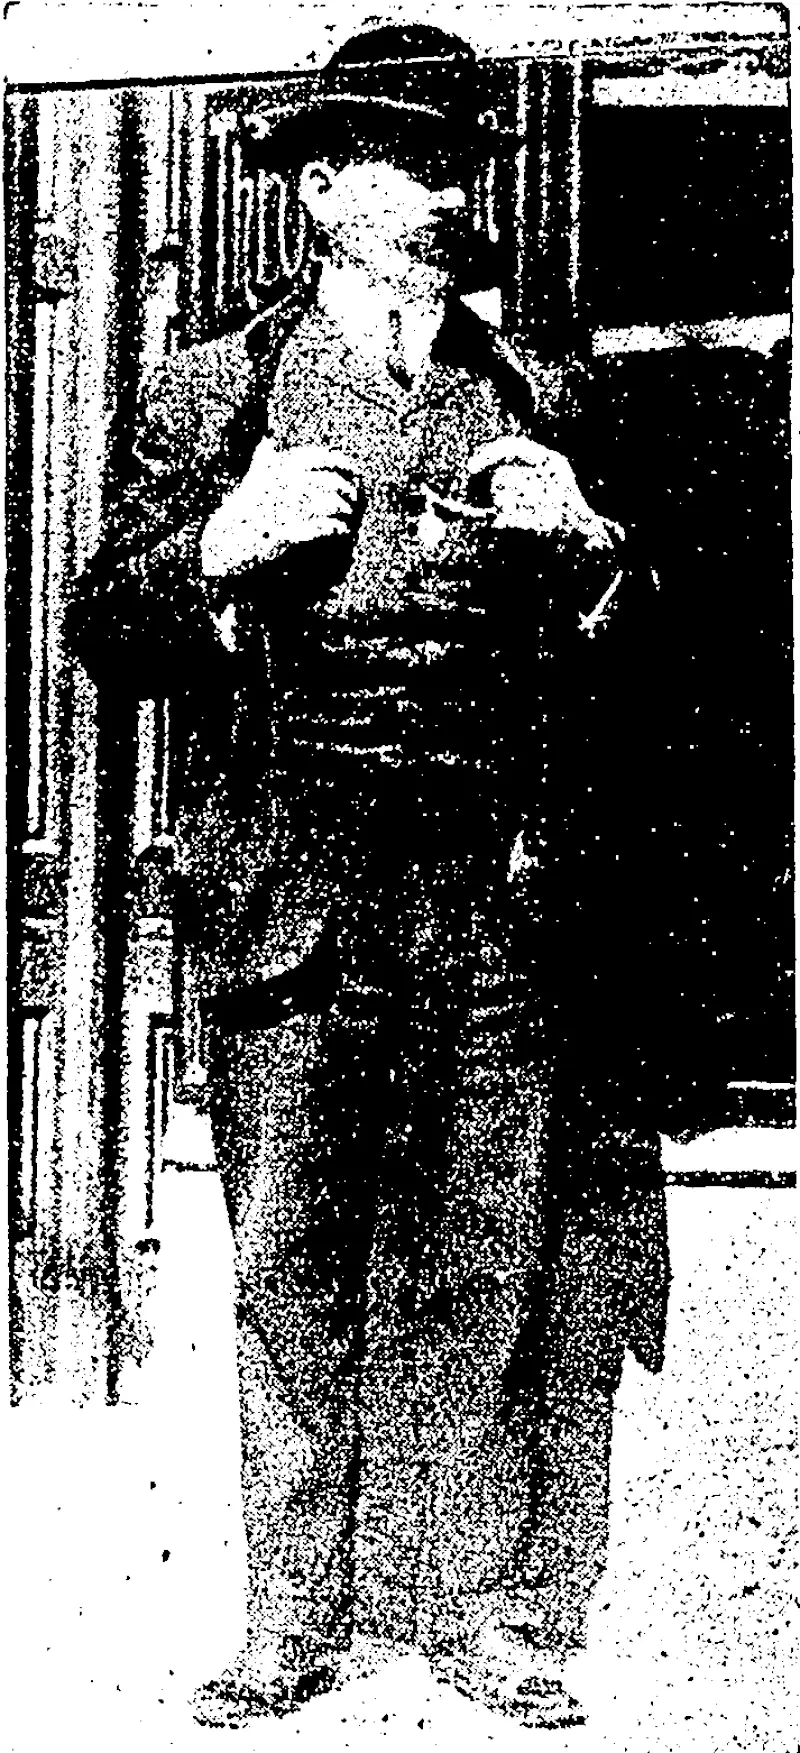 LOST���A PARROT.  A City Club Snap. (Observer, 19 September 1908)